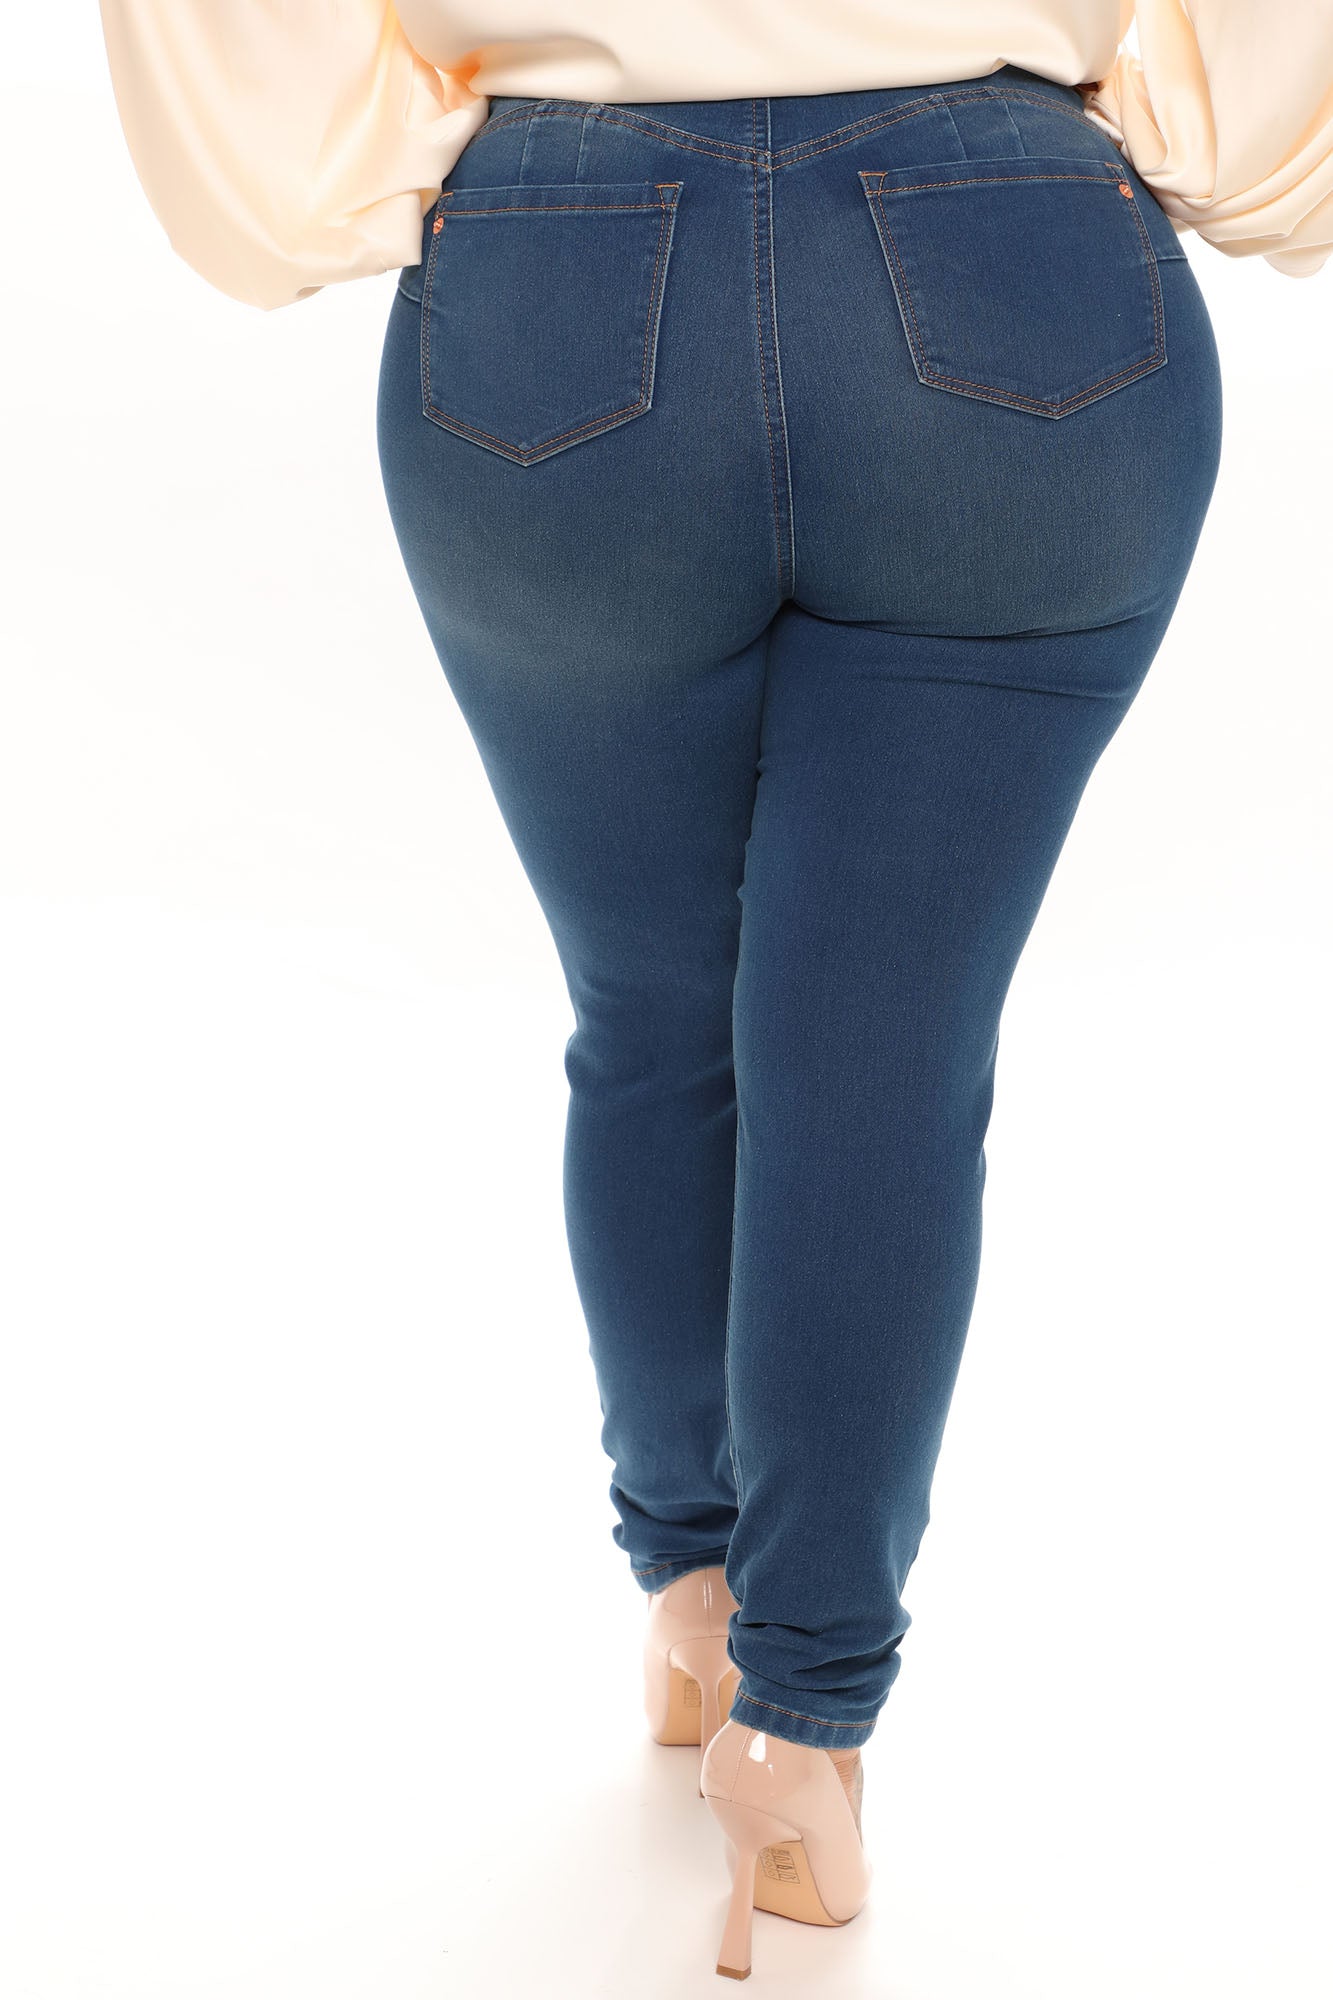 Holla Back Booty Lifting Compression Stretch Skinny Jeans - Medium Blue Wash